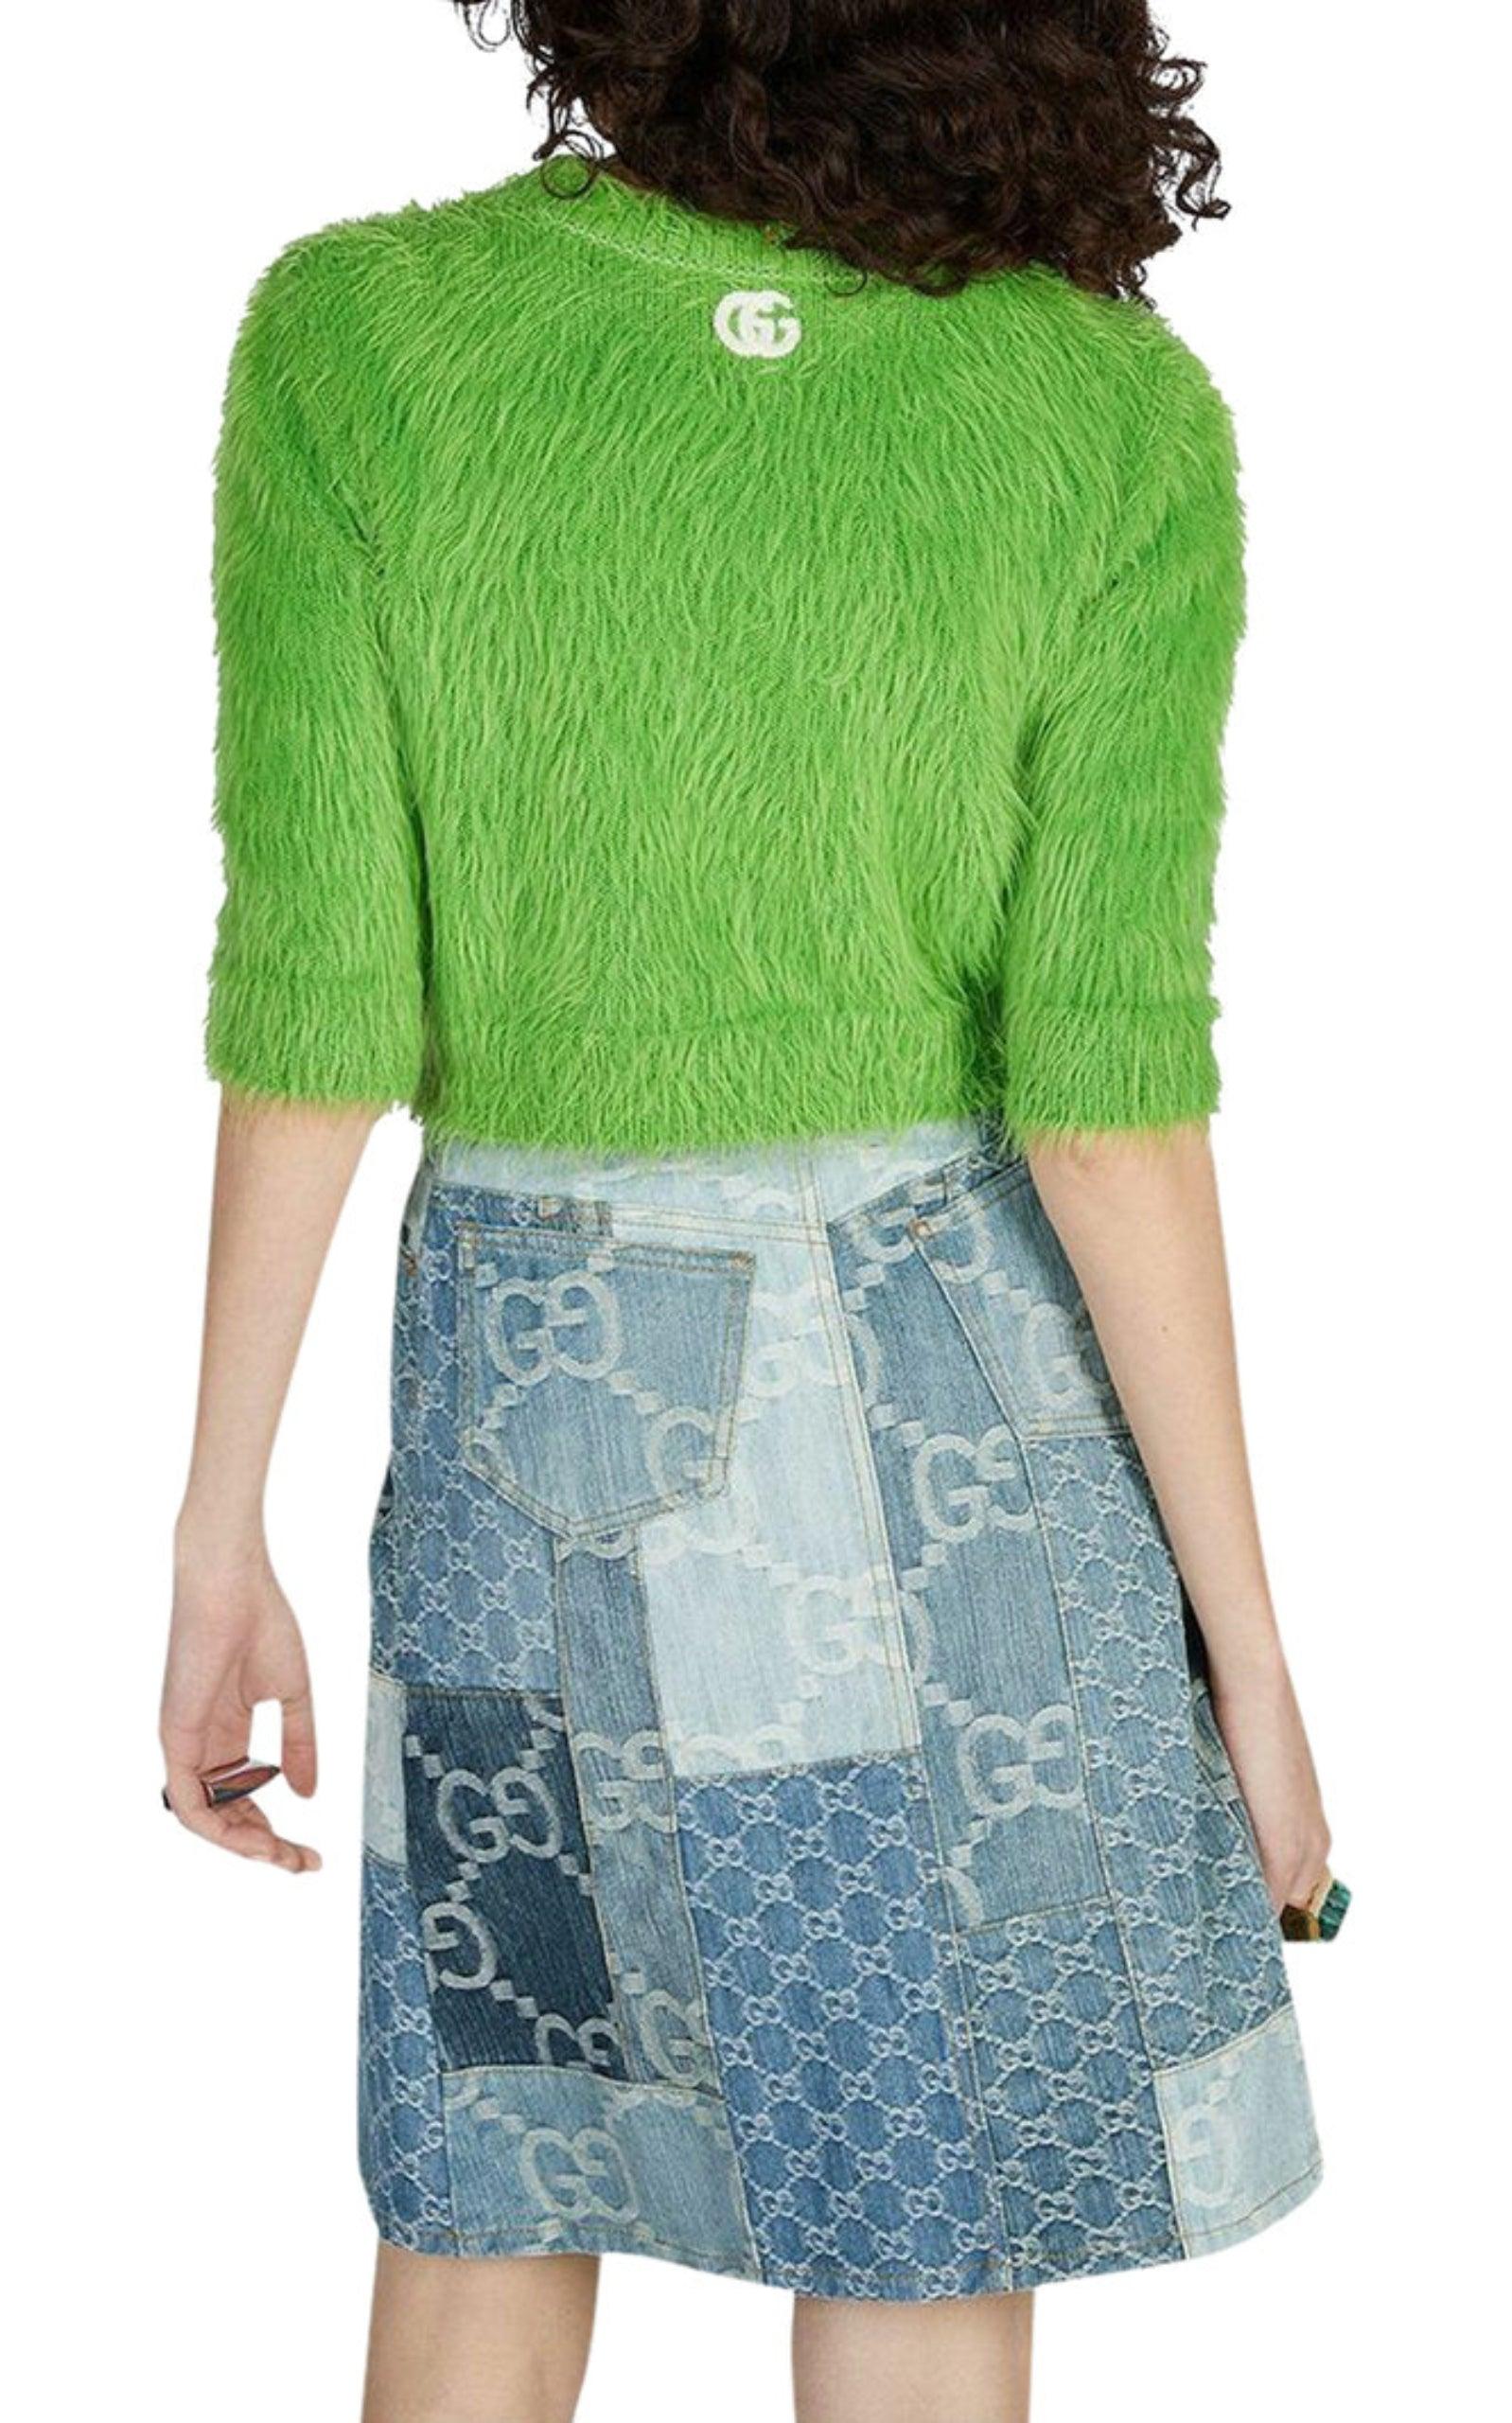 Brushed Wool Knit Sweater-Sweaters & Sweatshirts-Gucci-S-Green-Wool-Runway Catalog